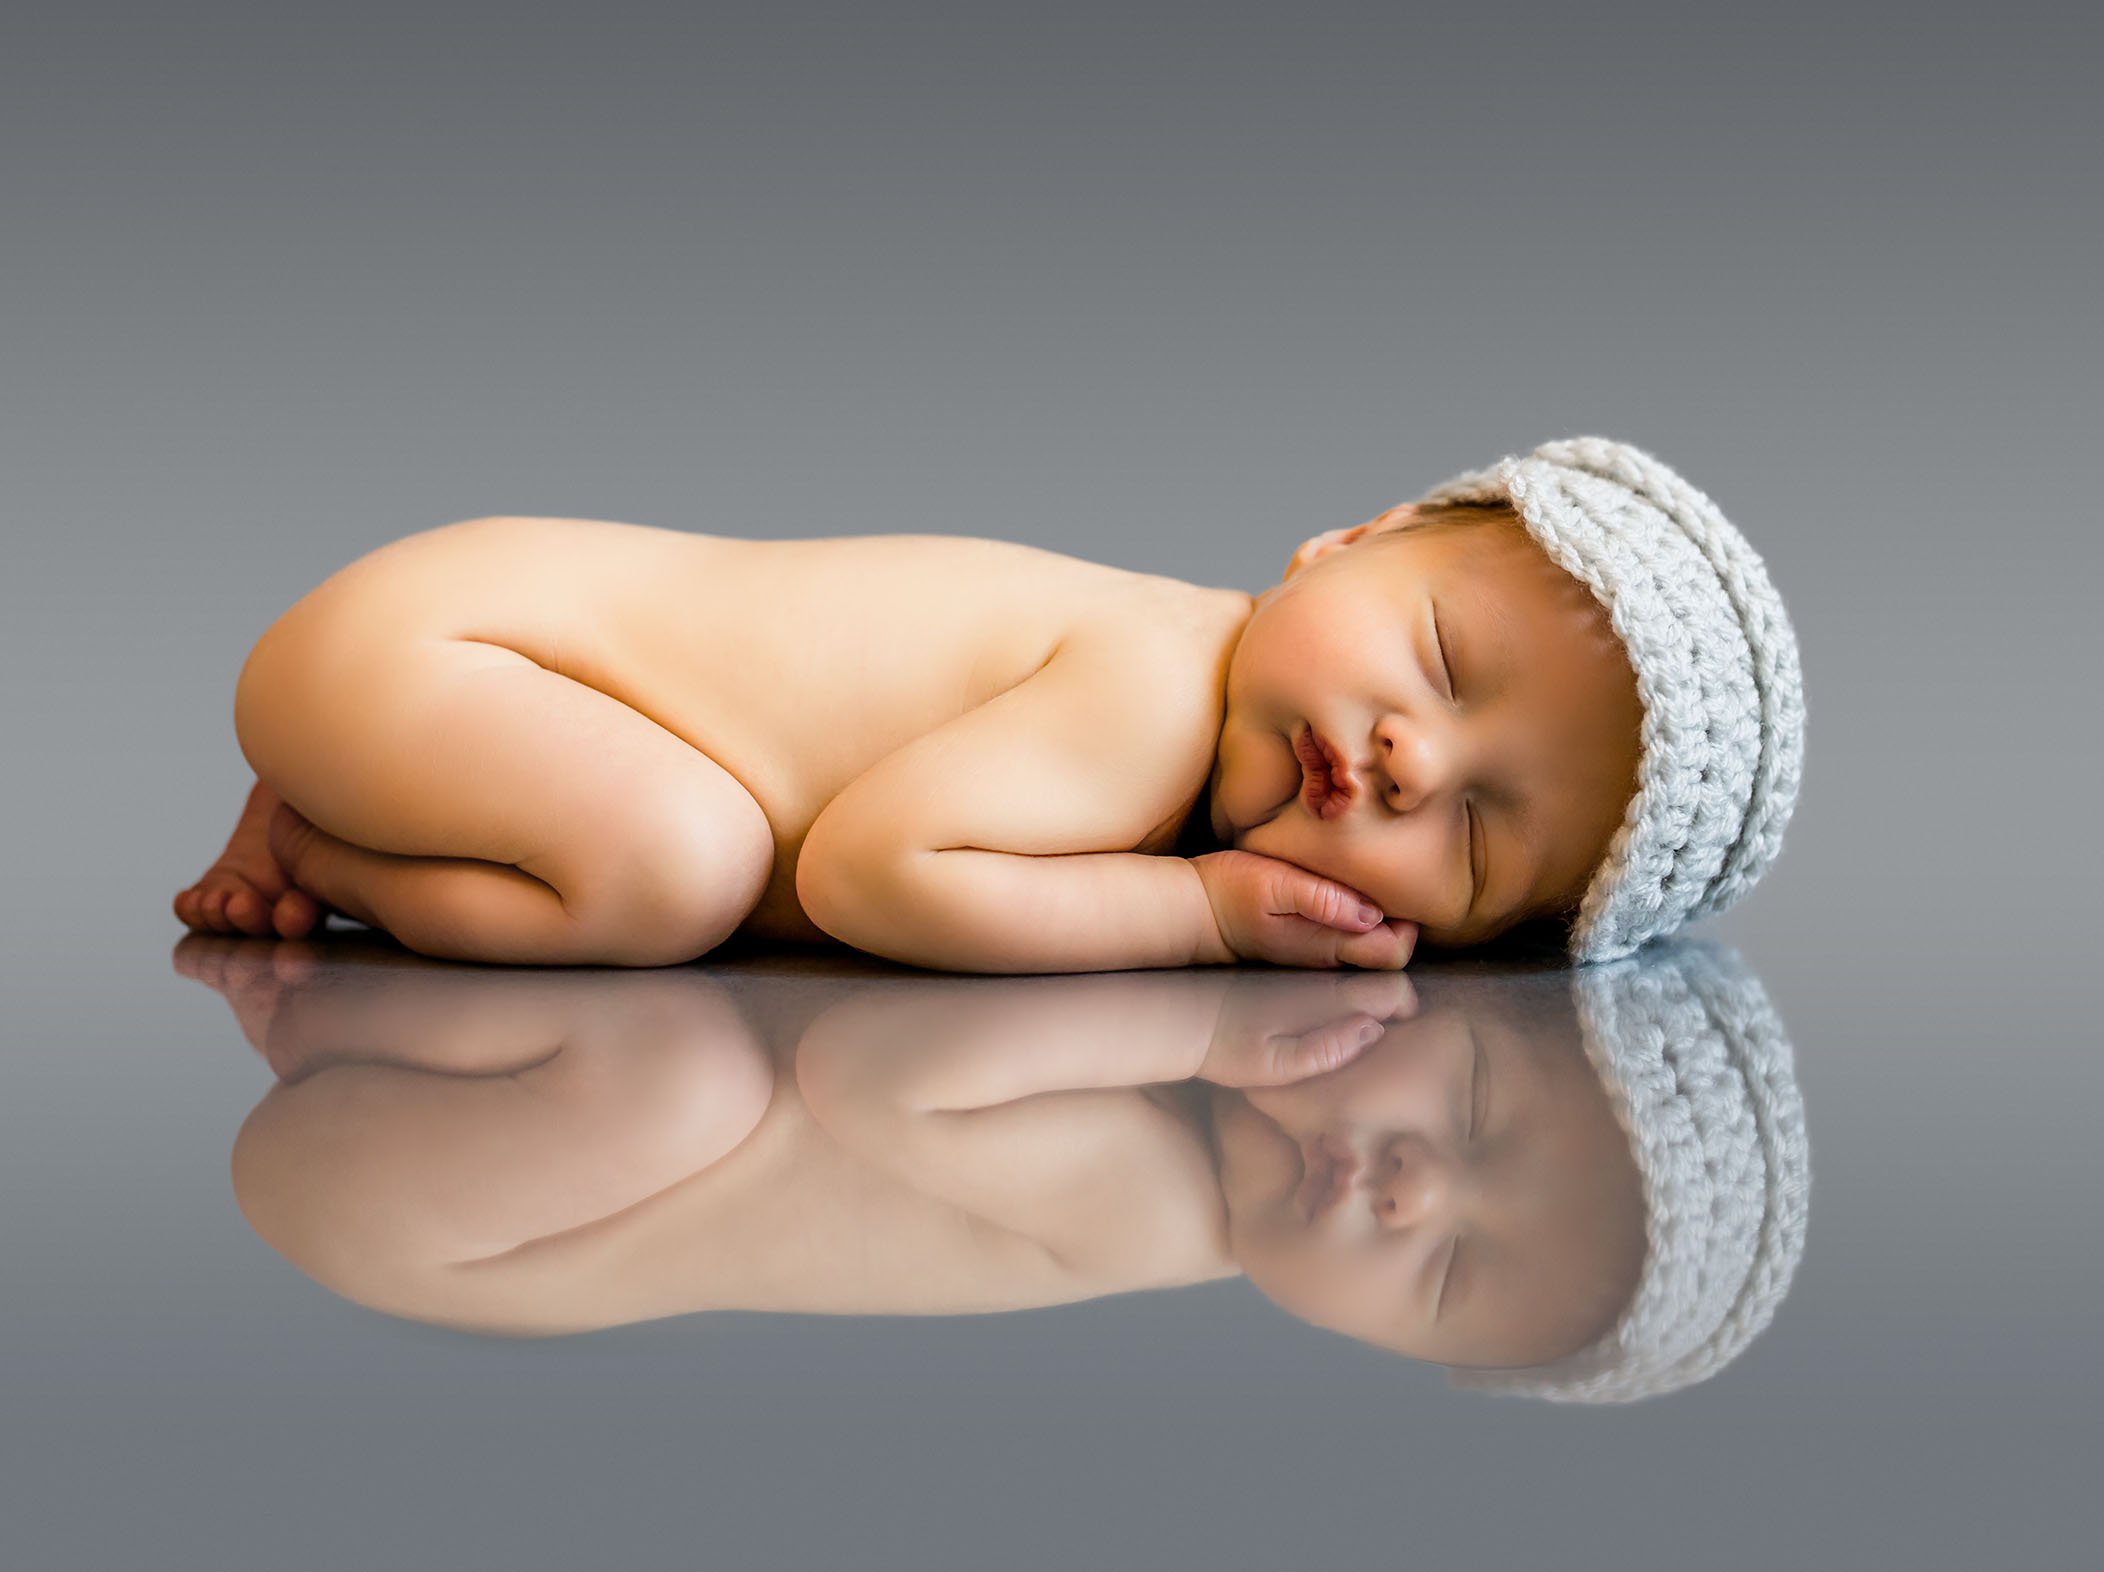 Newborn baby reflection on grey background